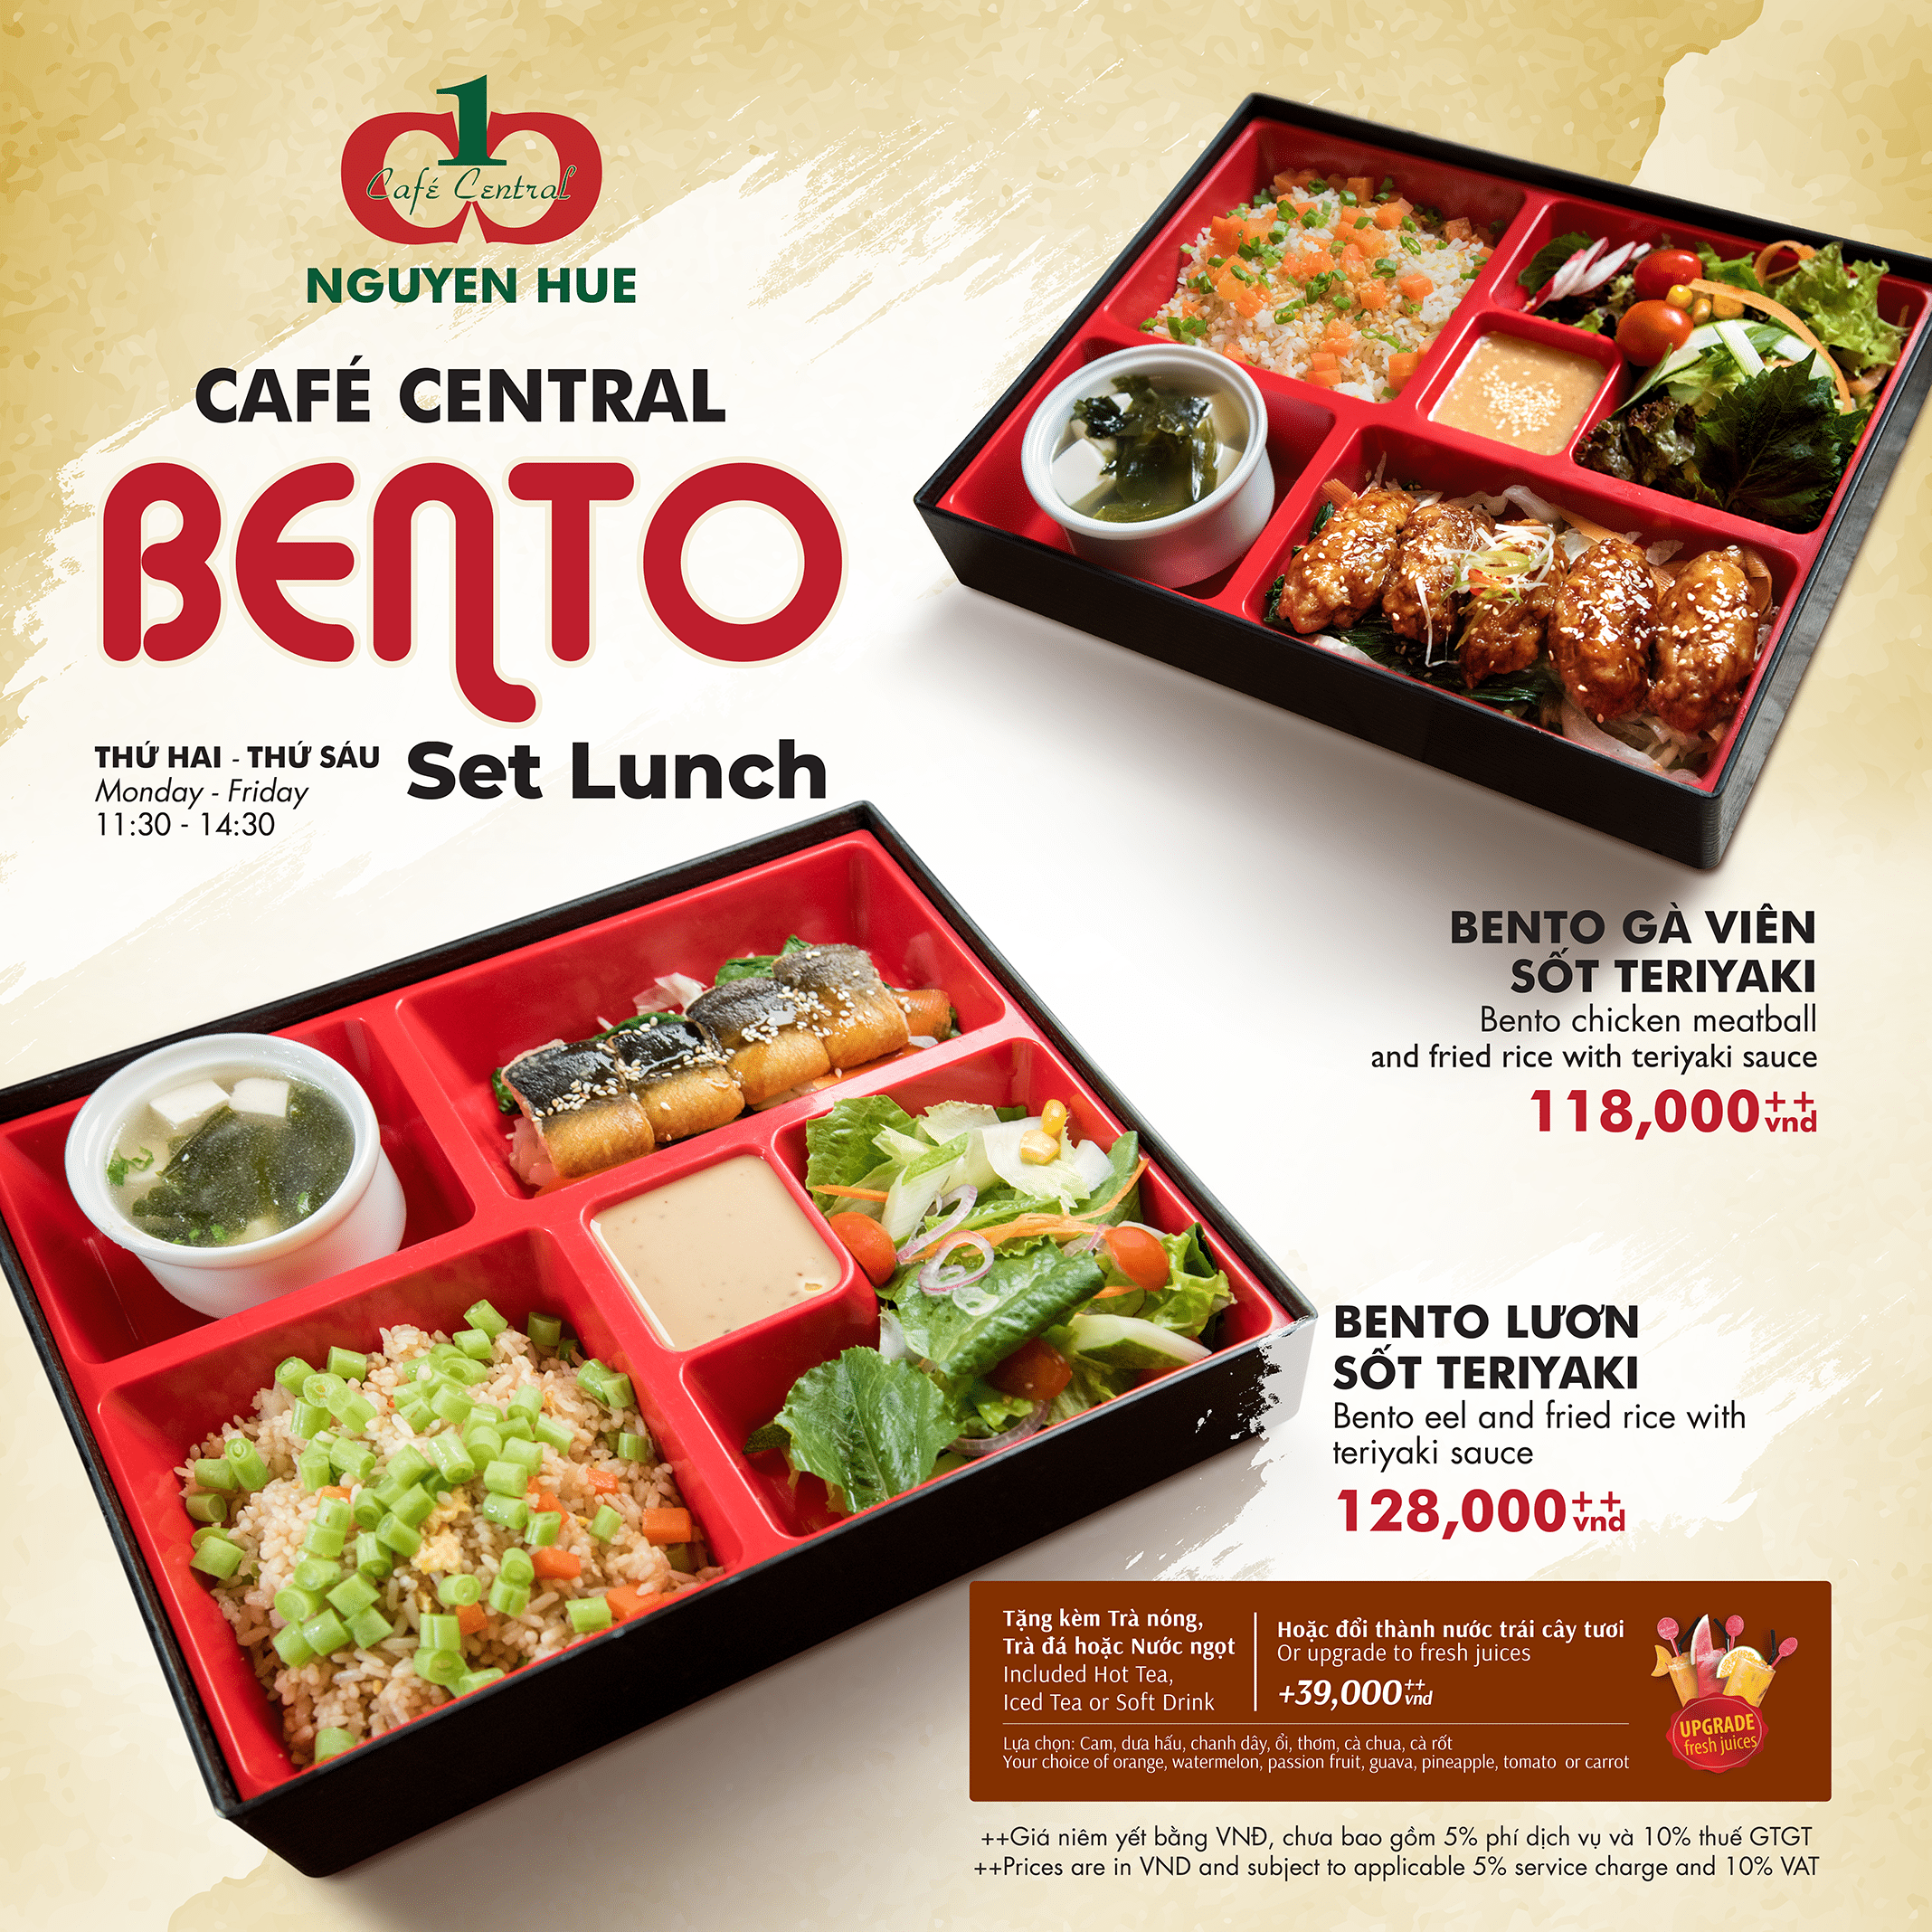 cafe-central-nguyen-hue-bento-lunch-optimizedjpg-1650602443.png